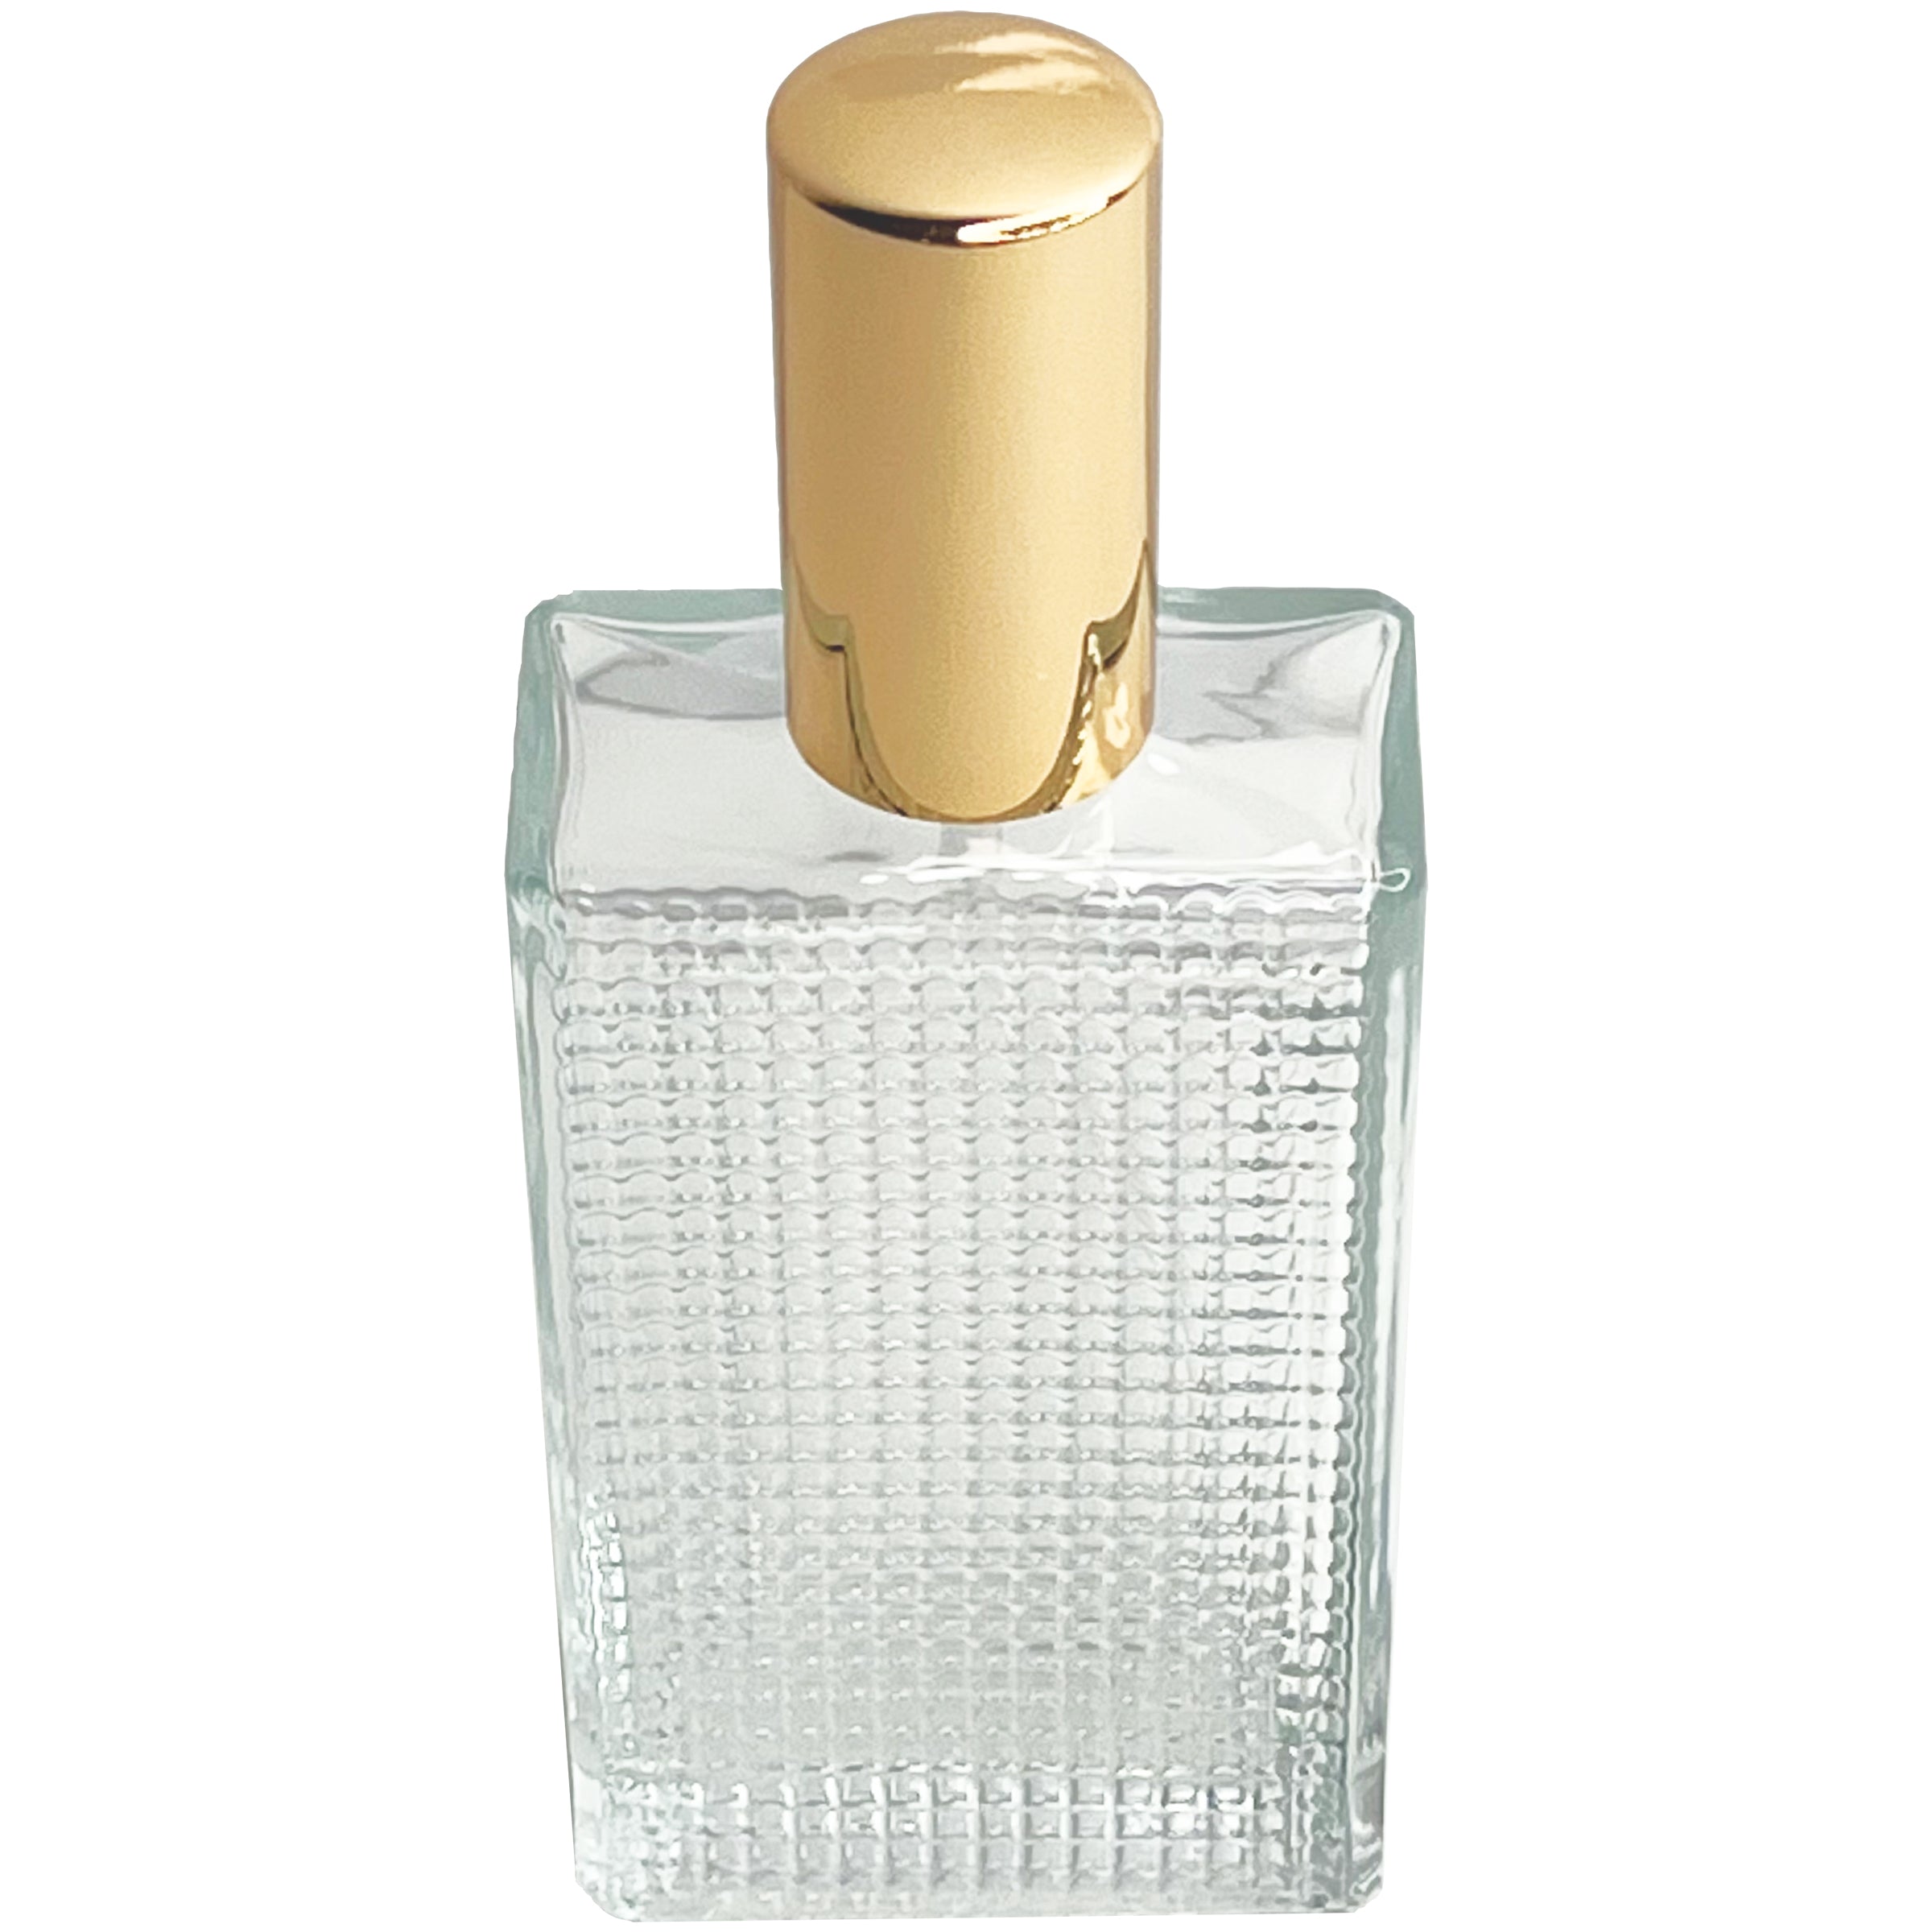 100ml 3.3oz Perfume Front Grid Glass Spray Bottles Gold Atomizers